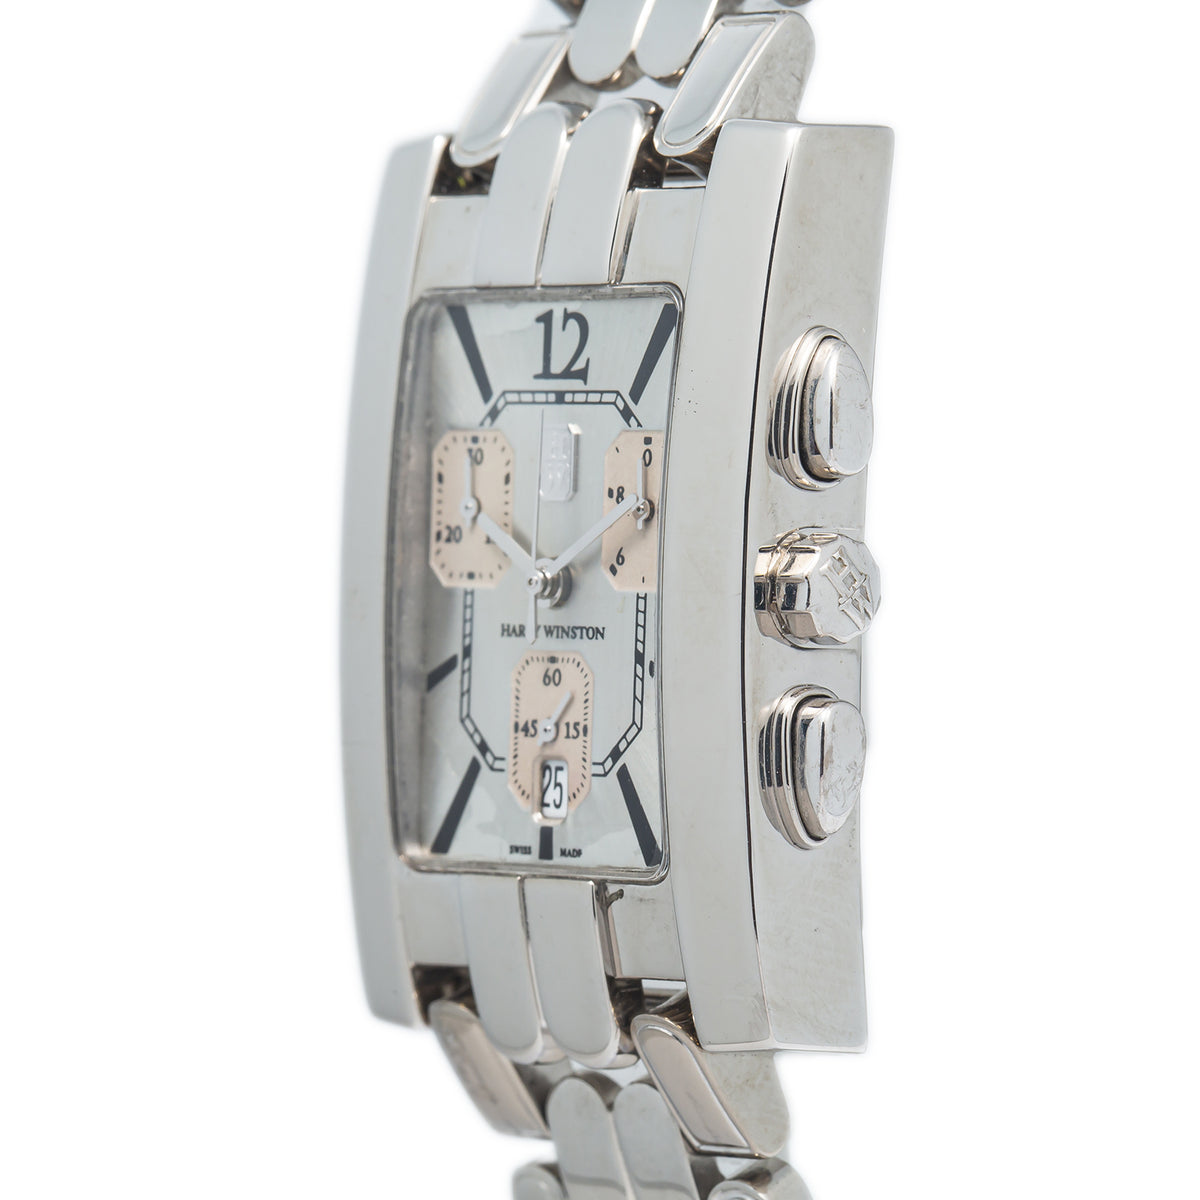 Harry Winston Premier 310UCQW 18k White Gold Quartz Silver Dial Watch 27x42mm